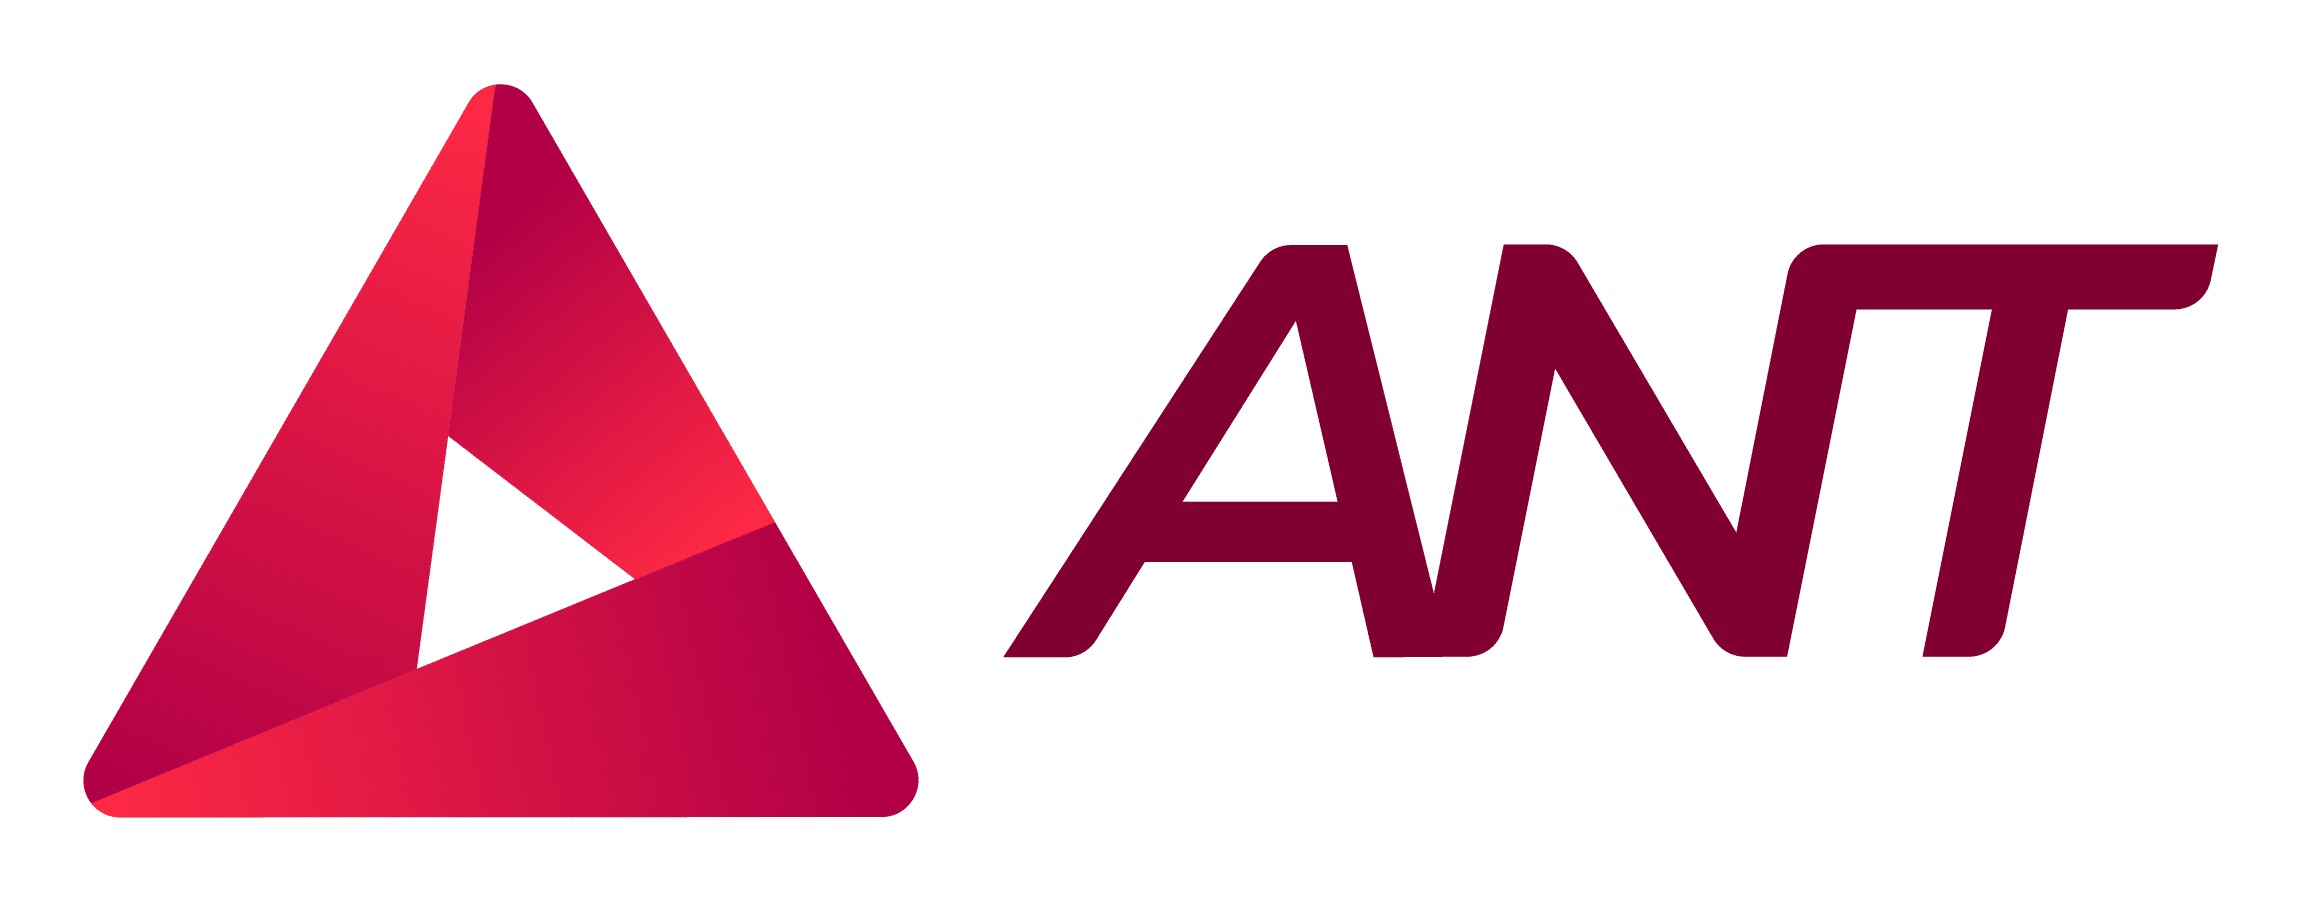 agile networks technologies logo